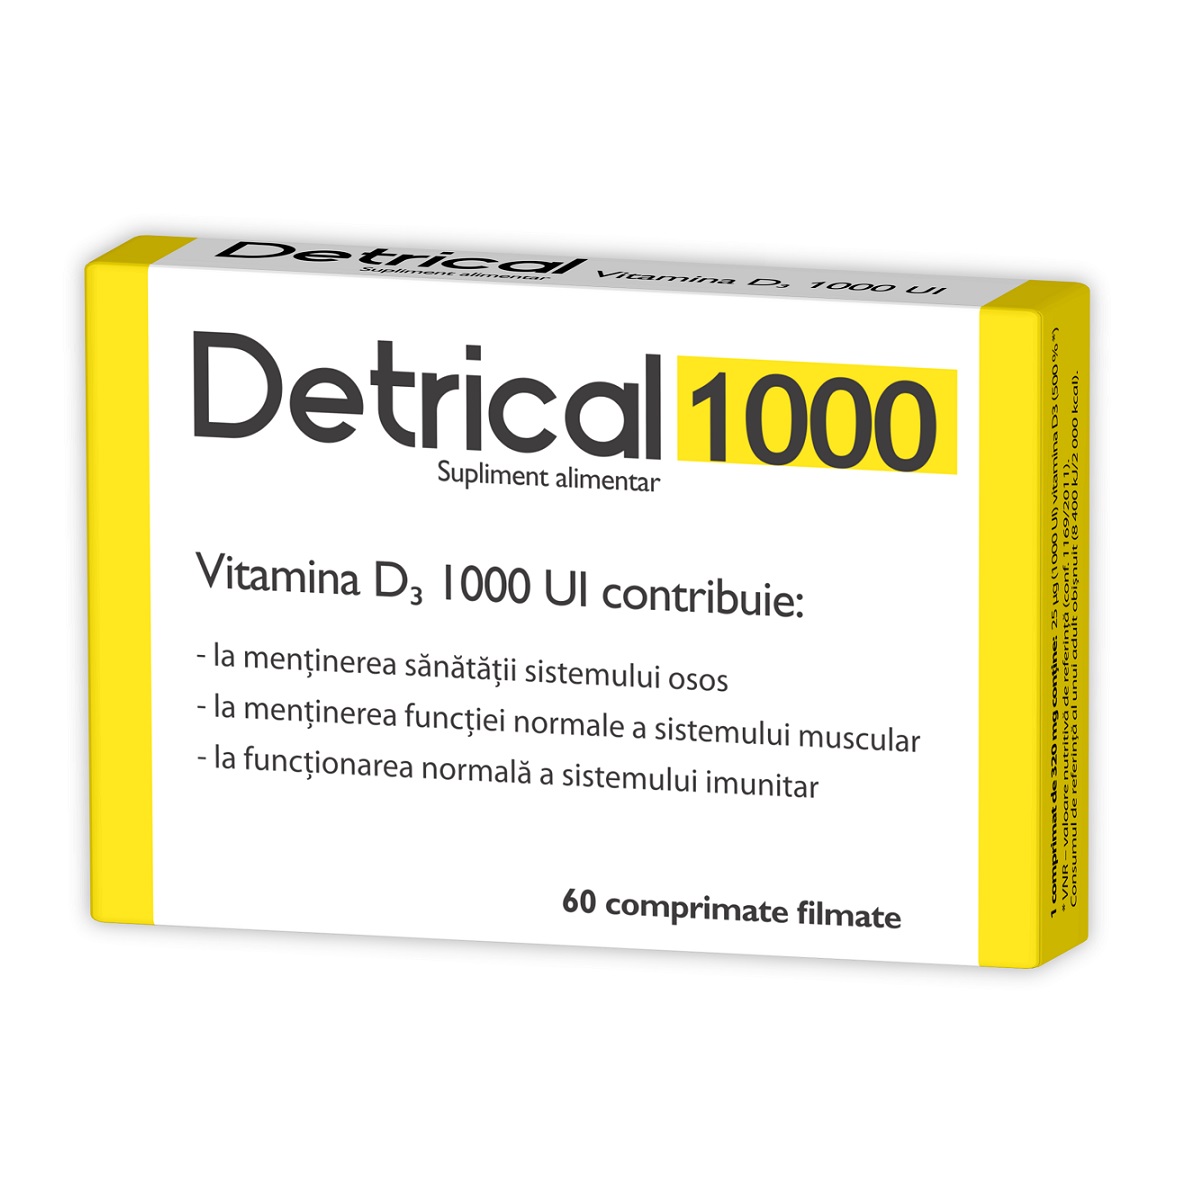 Osteoporoza - Detrical vitamina D 1000 UI, 60 comprimate, Zdrovit, sinapis.ro